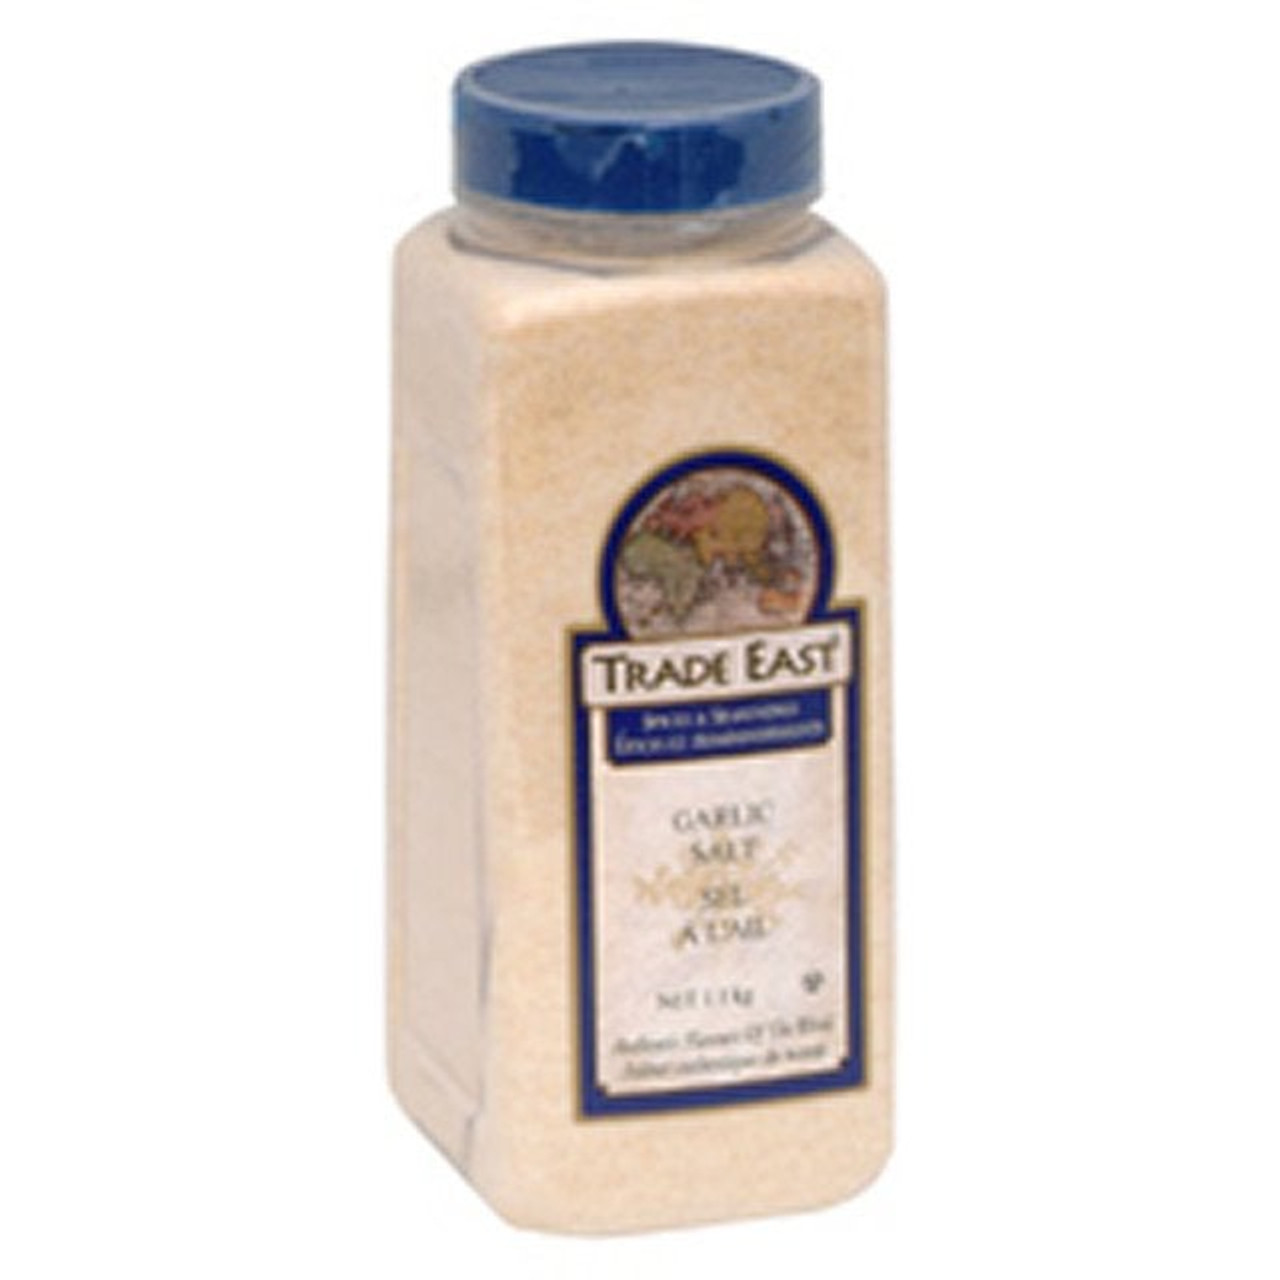 Trade East Granulated Garlic Salt, Spice, Shaker | 1.1KG/Unit, 12 Units/Case